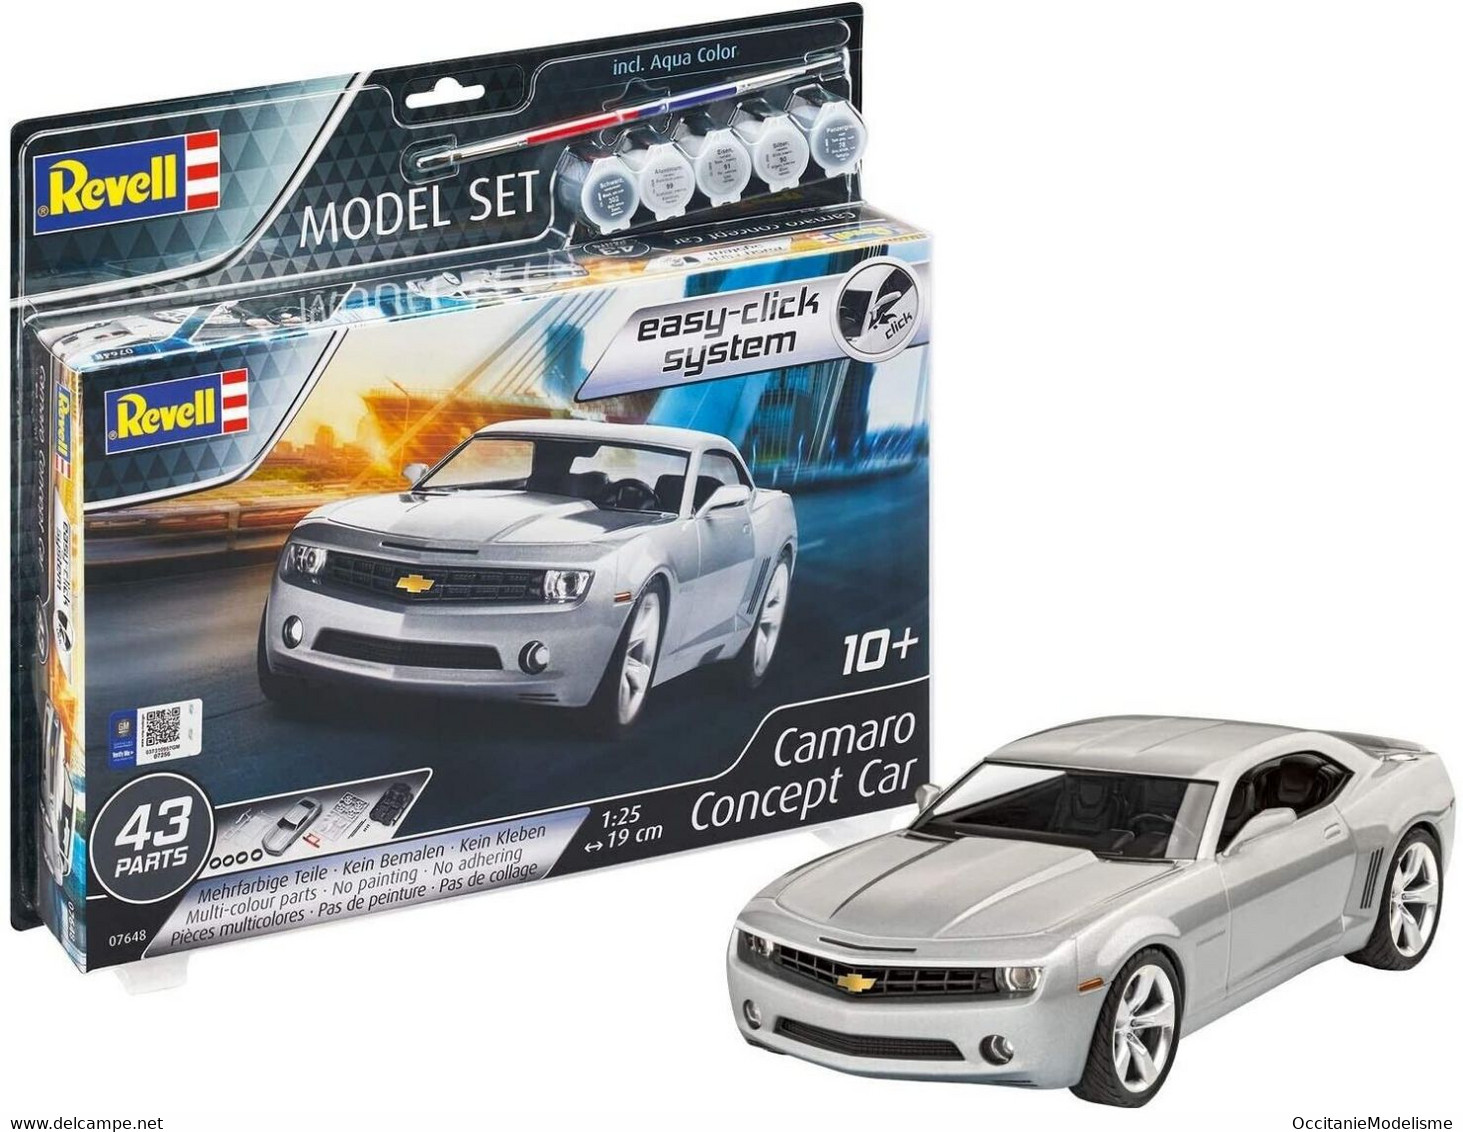 Revell - SET CHEVROLET CAMARO Concept Car + Peintures Maquette Kit Plastique 67648 Neuf NBO 1/25 - Carros